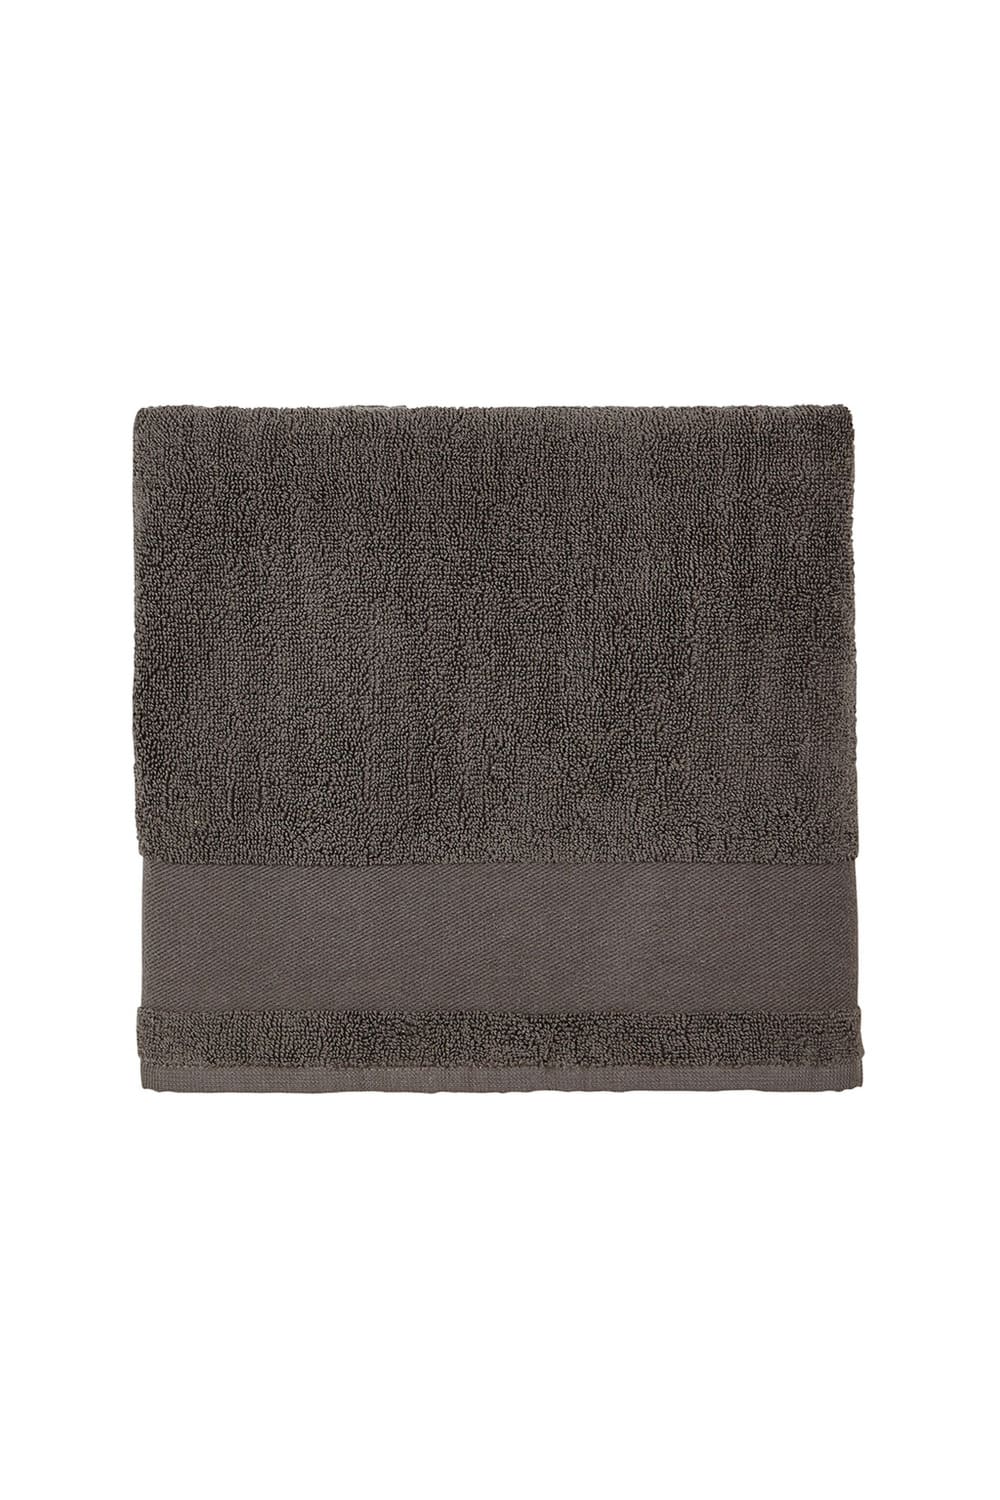 SOLS Peninsula 70 Bath Towel (Dark Gray) (One Size)